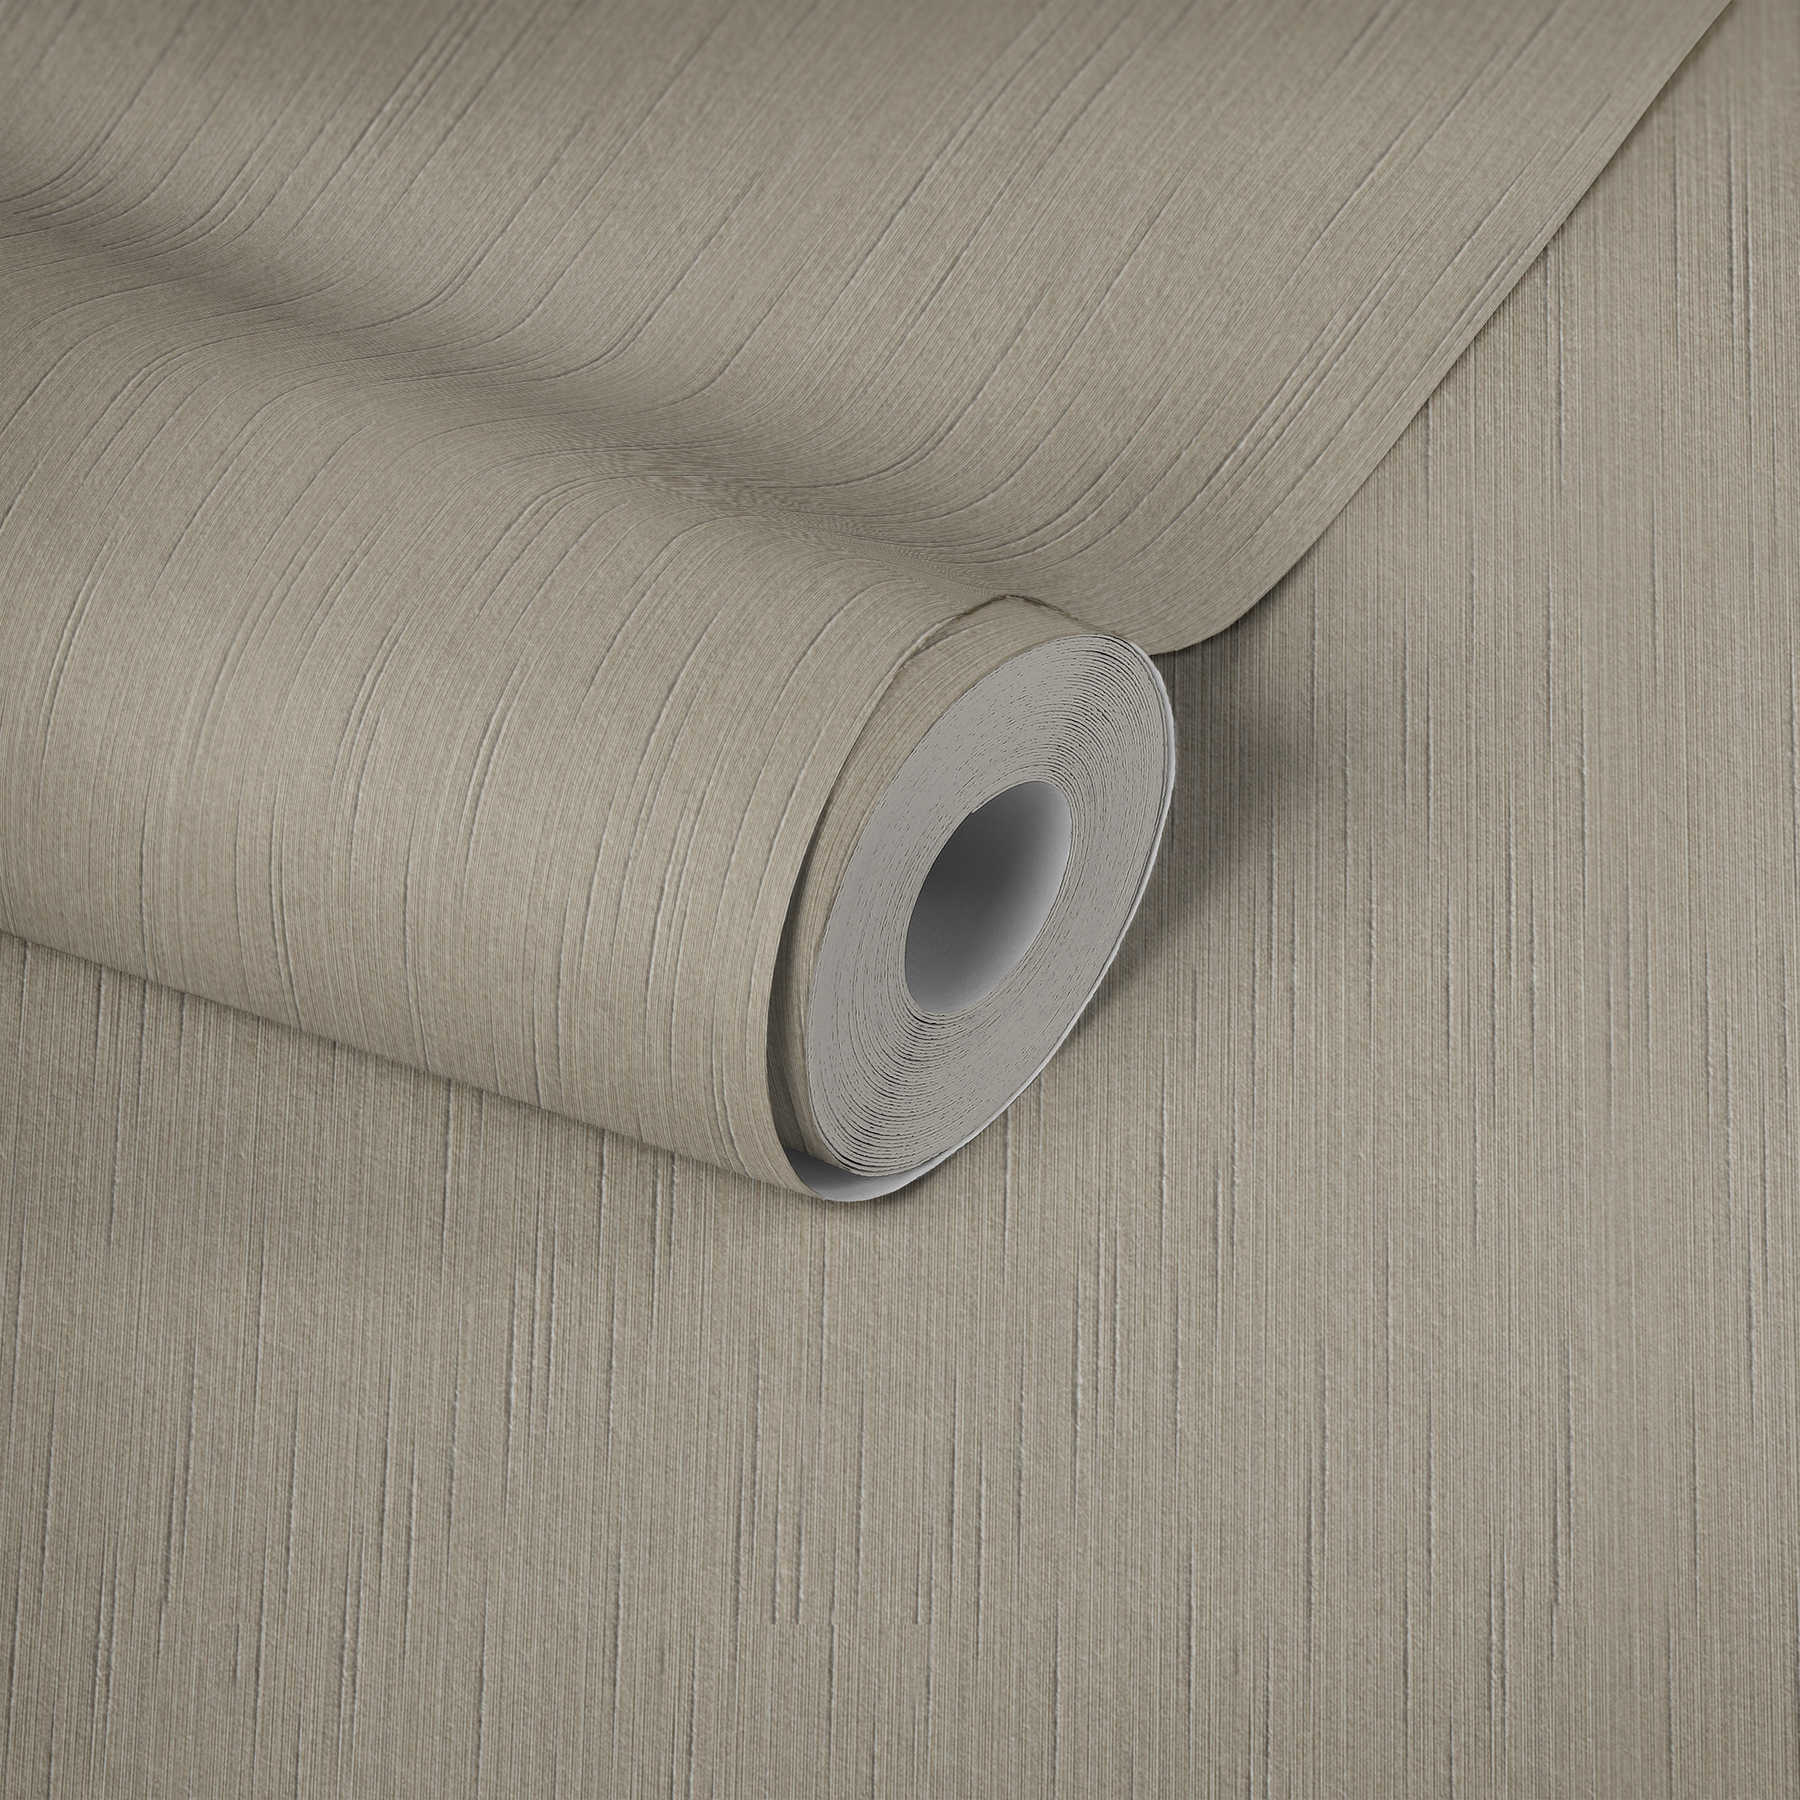             Non-woven wallpaper camel beige with textile texture
        